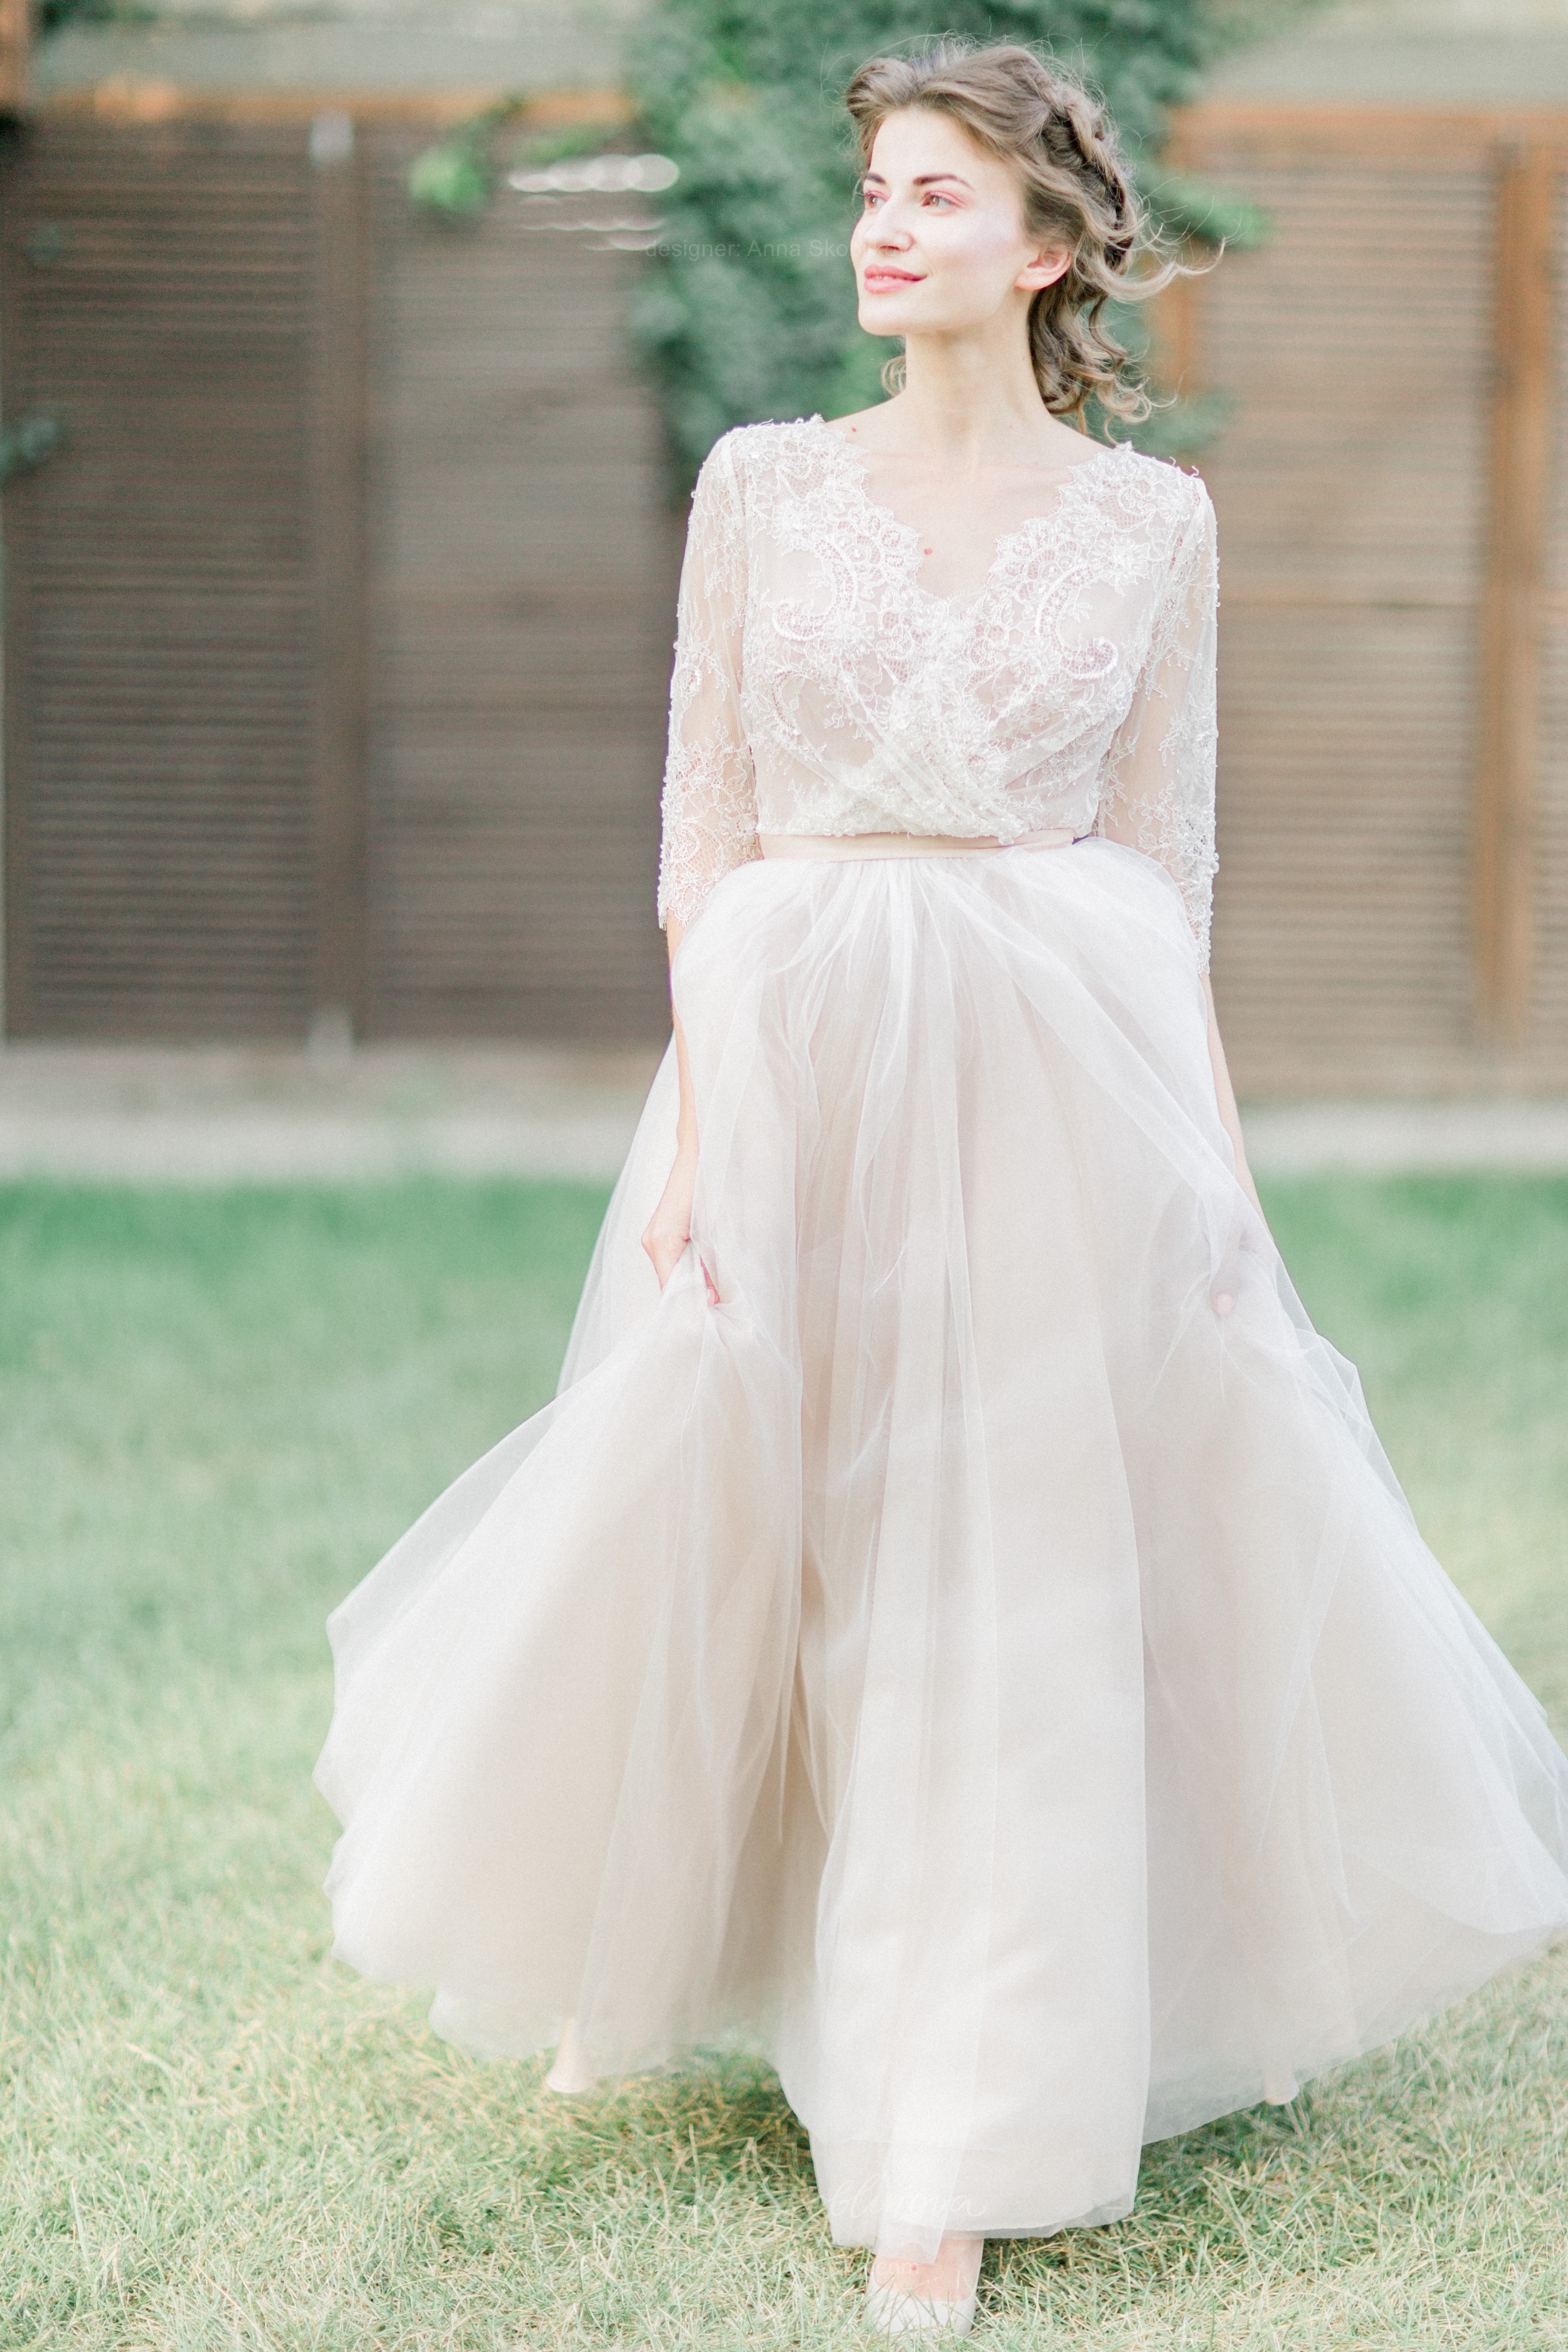 Simple wedding dress - Anna Skoblikova